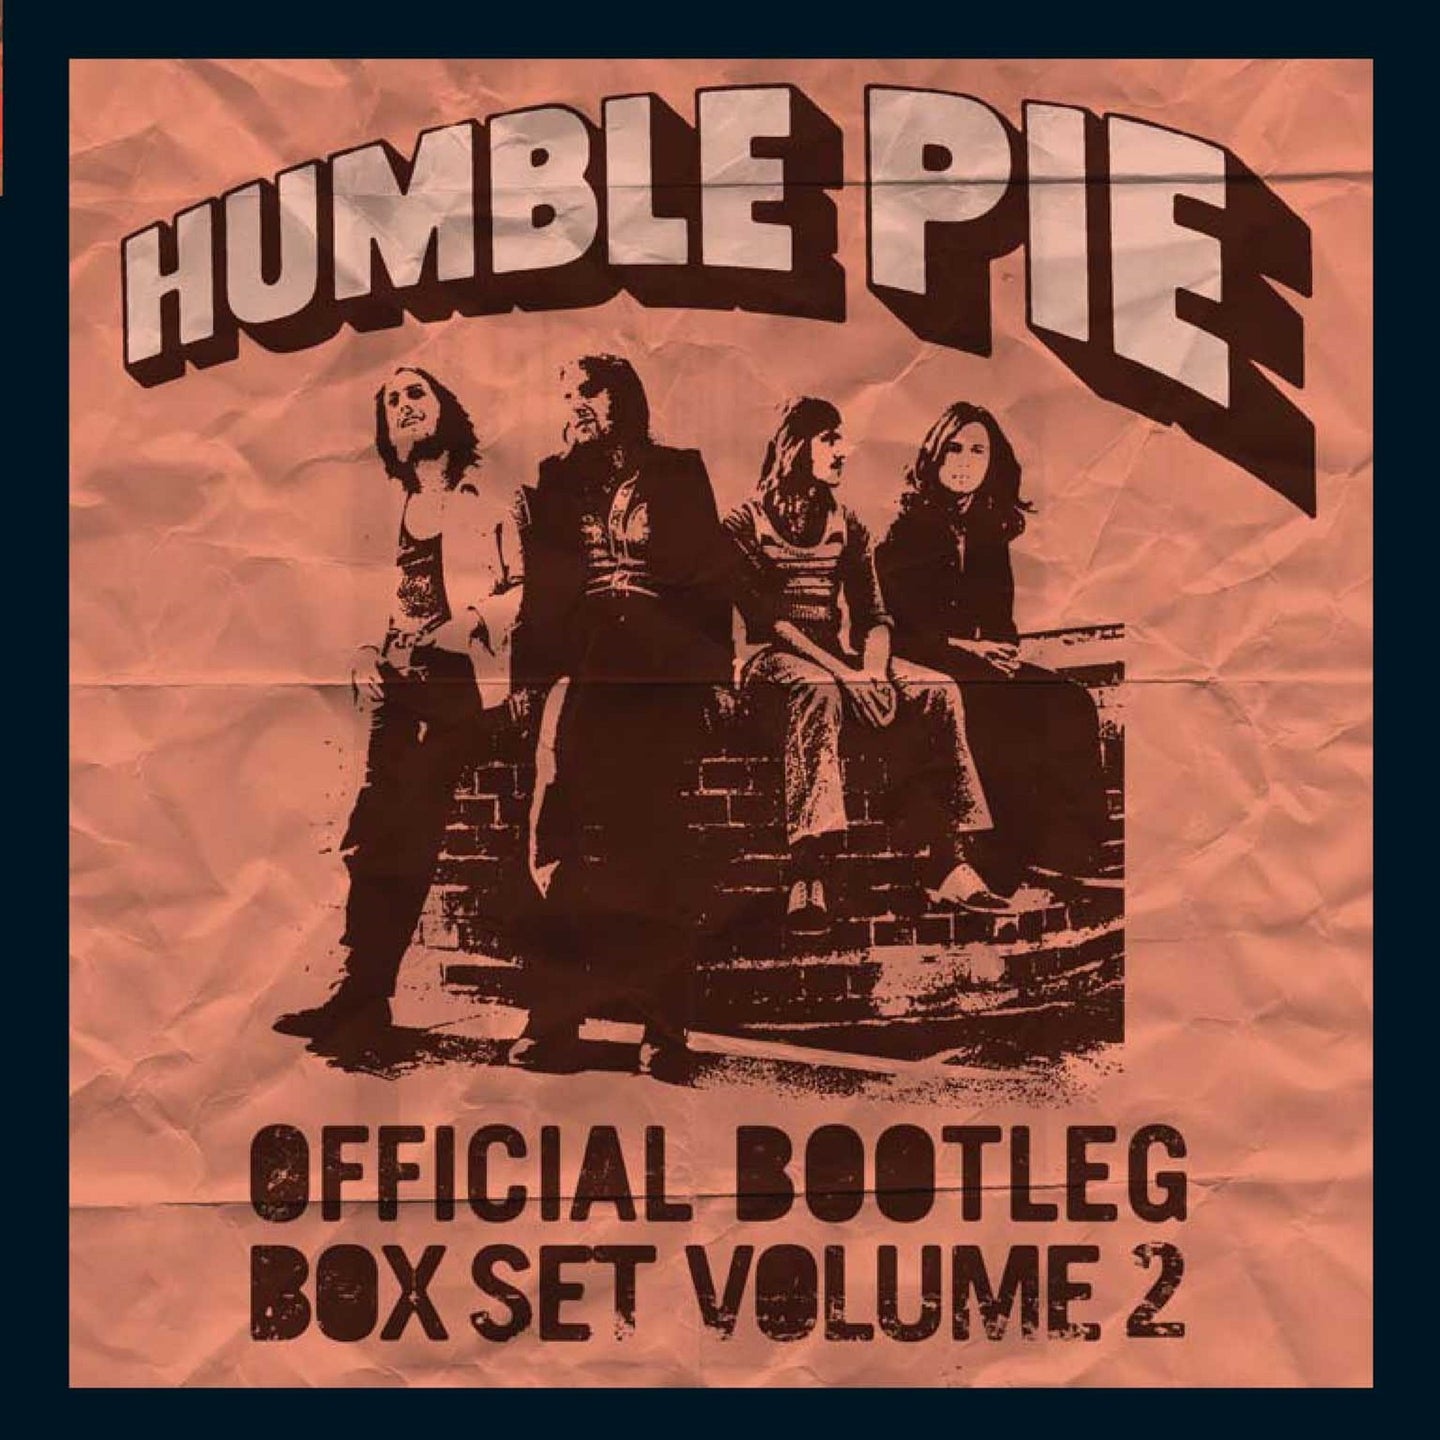 The Official Bootleg Box Set Volume 2